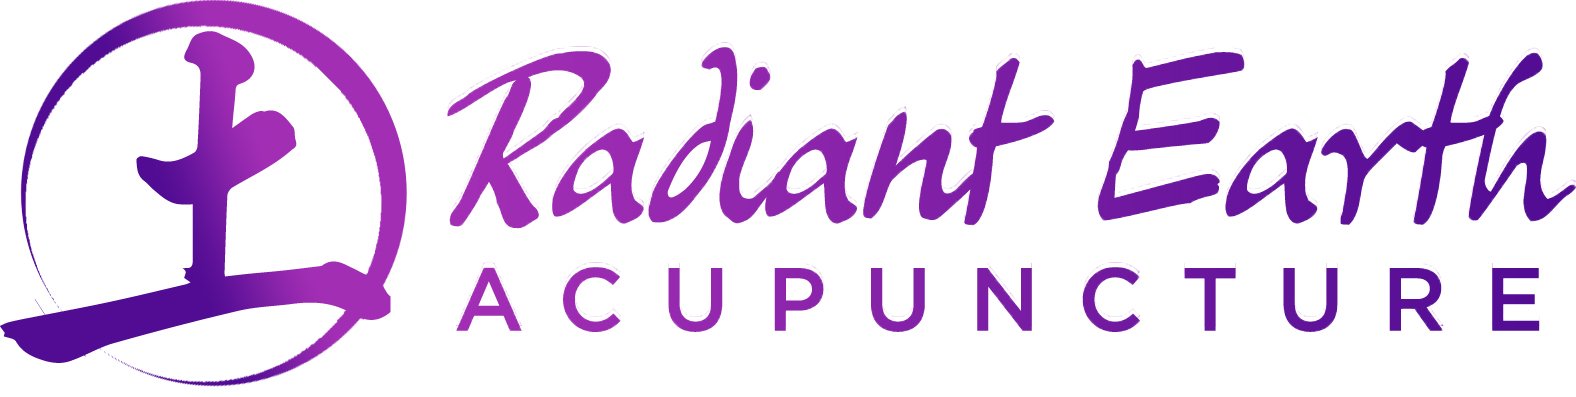 Radiant Earth Logo (1).jpg